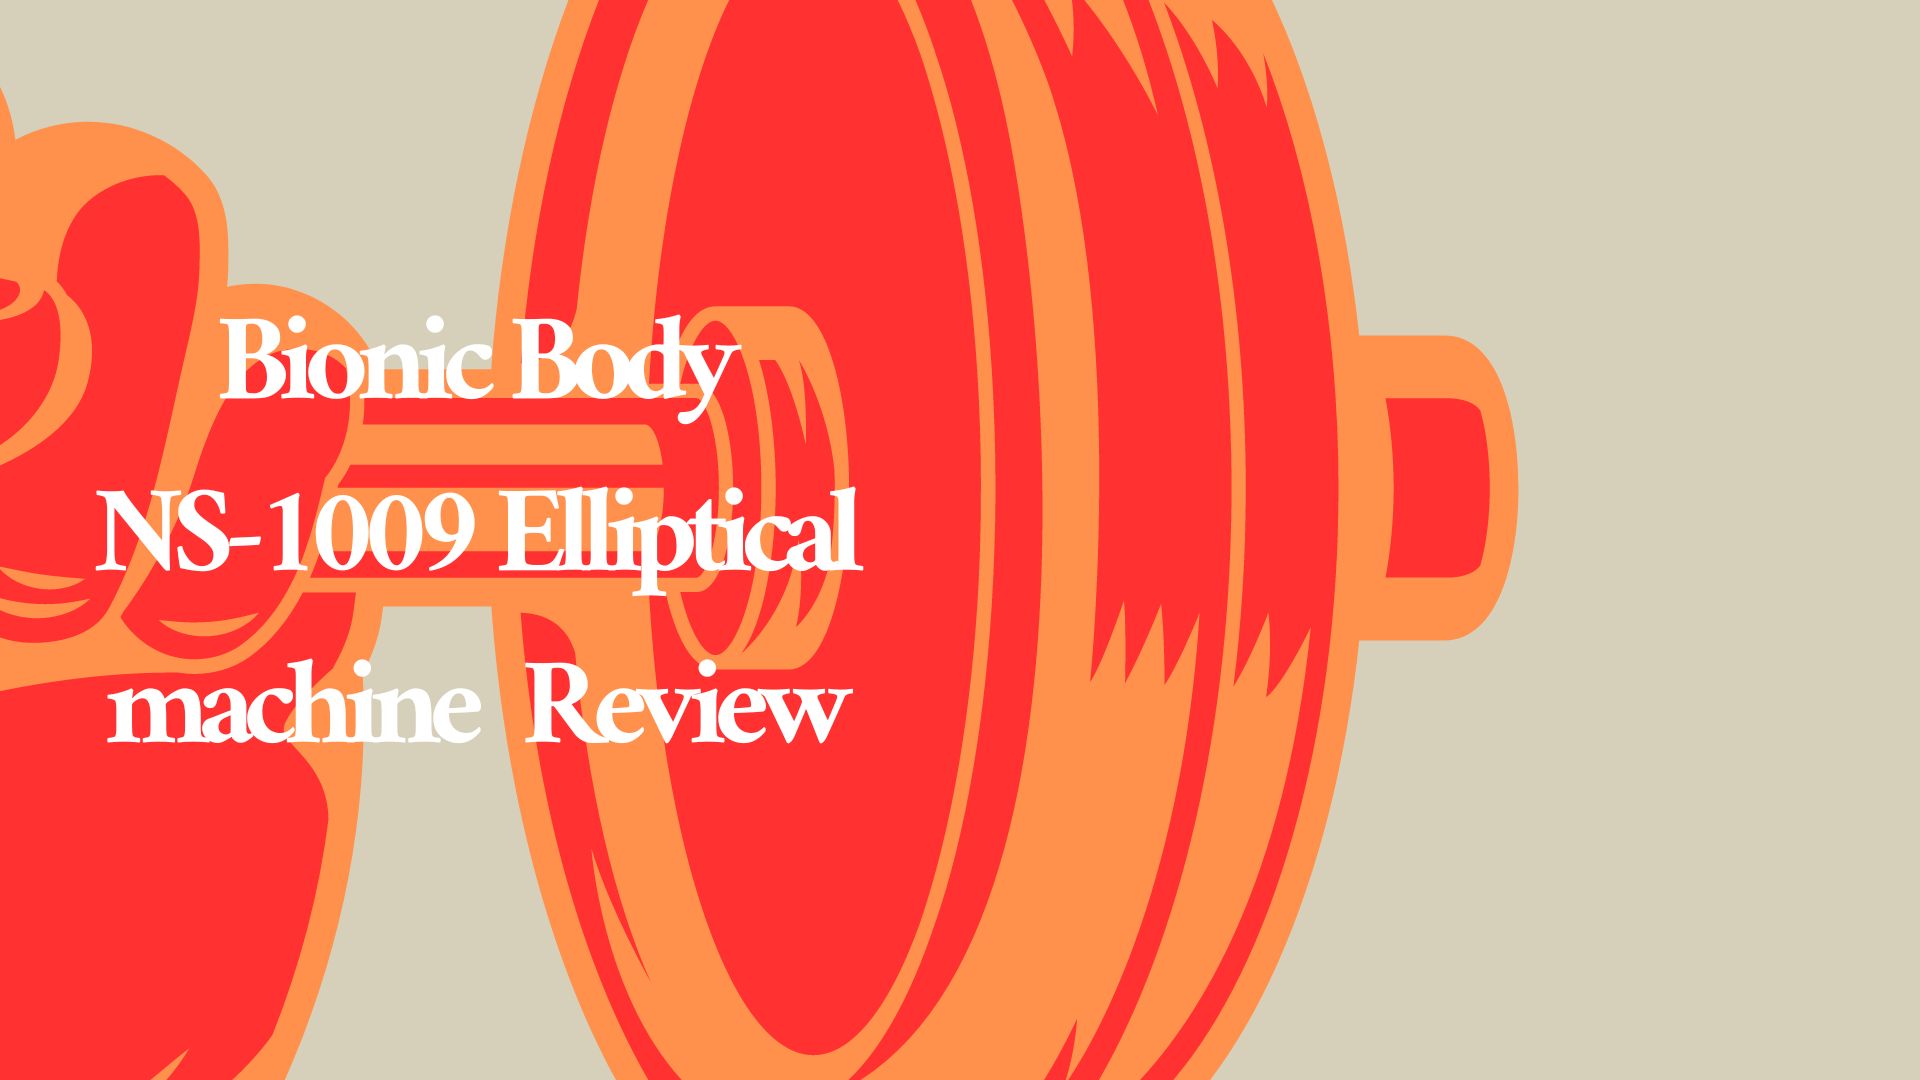 Bionic Body NS-1009 Elliptical machine Review